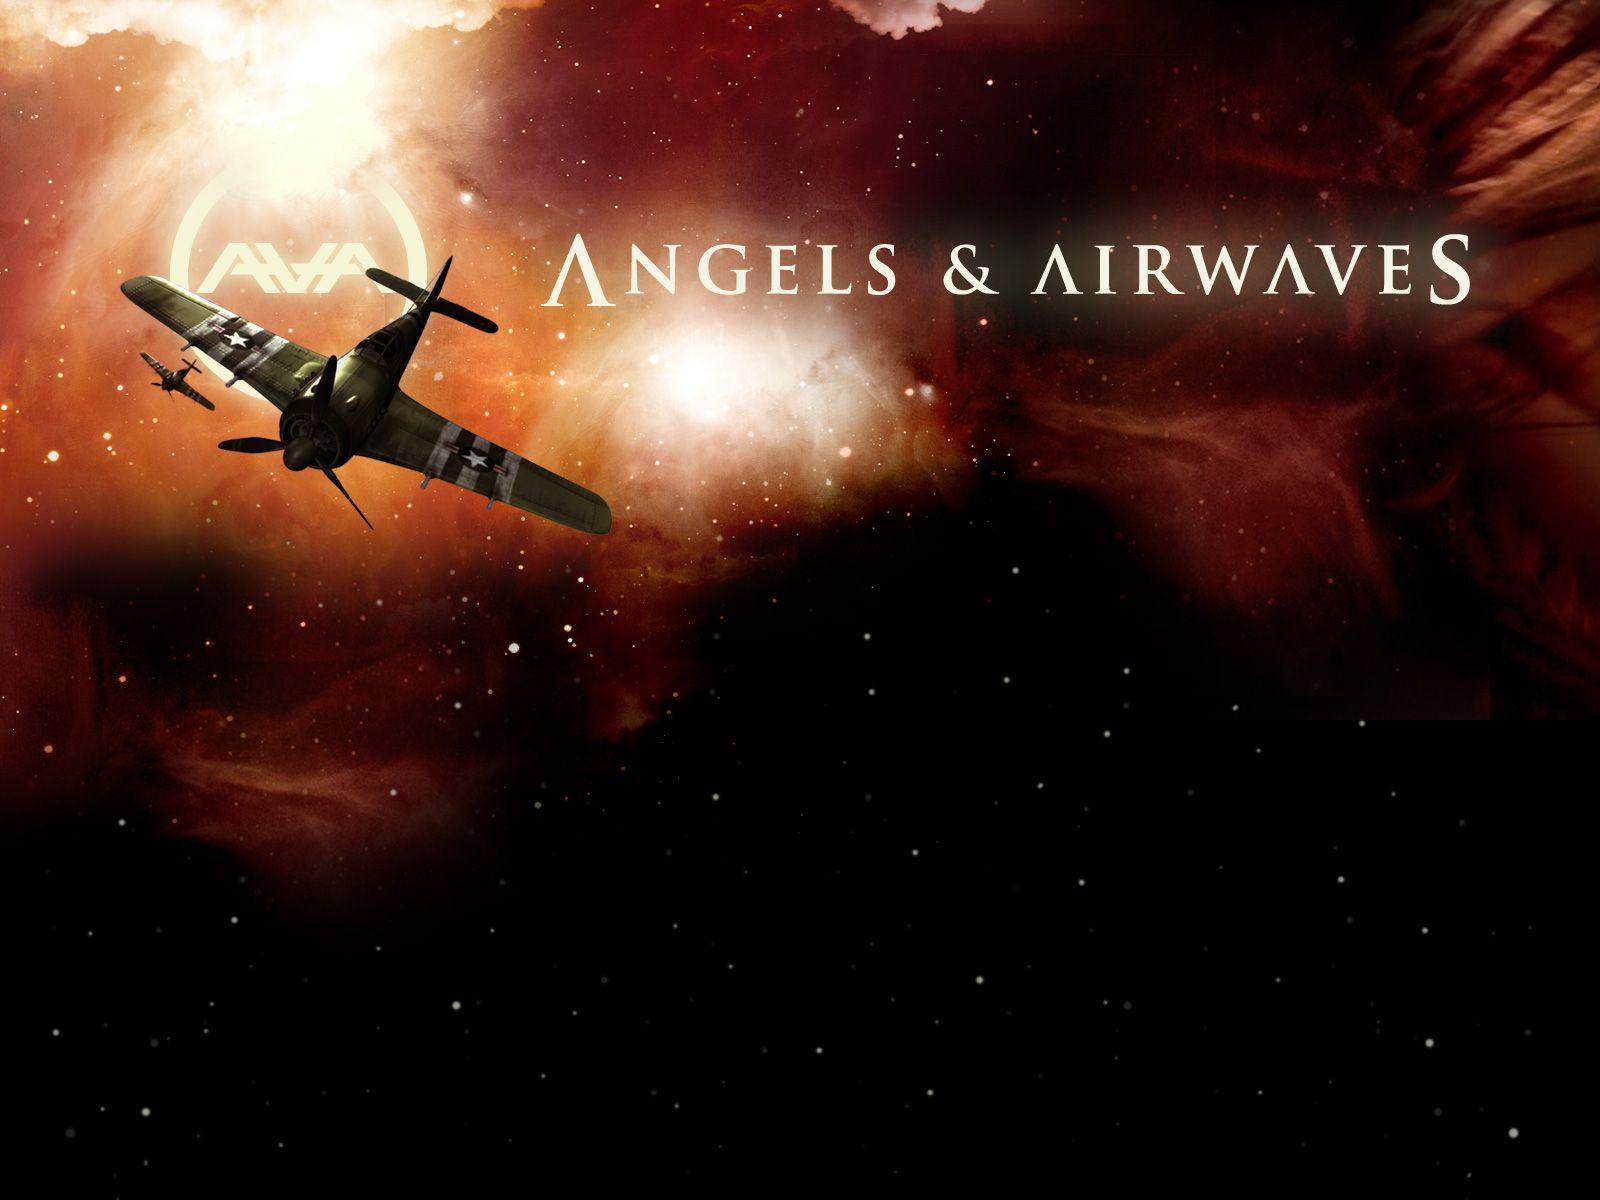 1493x1493px Angels And Airwaves 2798.82 KB